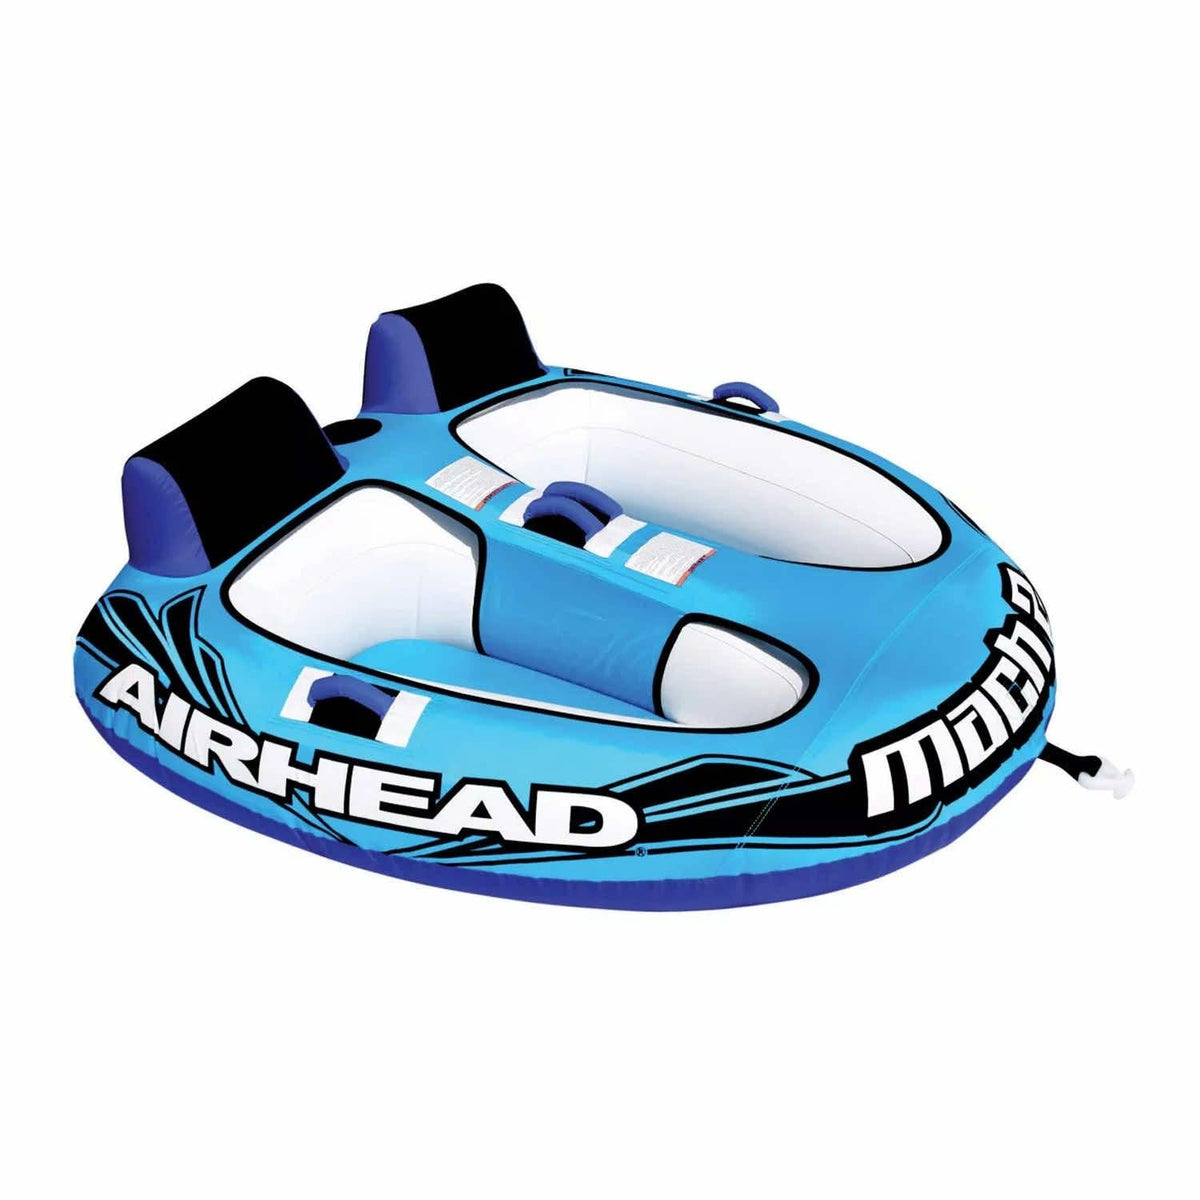 MACH AIRHEAD | 2 RIDER - Too Fast Rentals